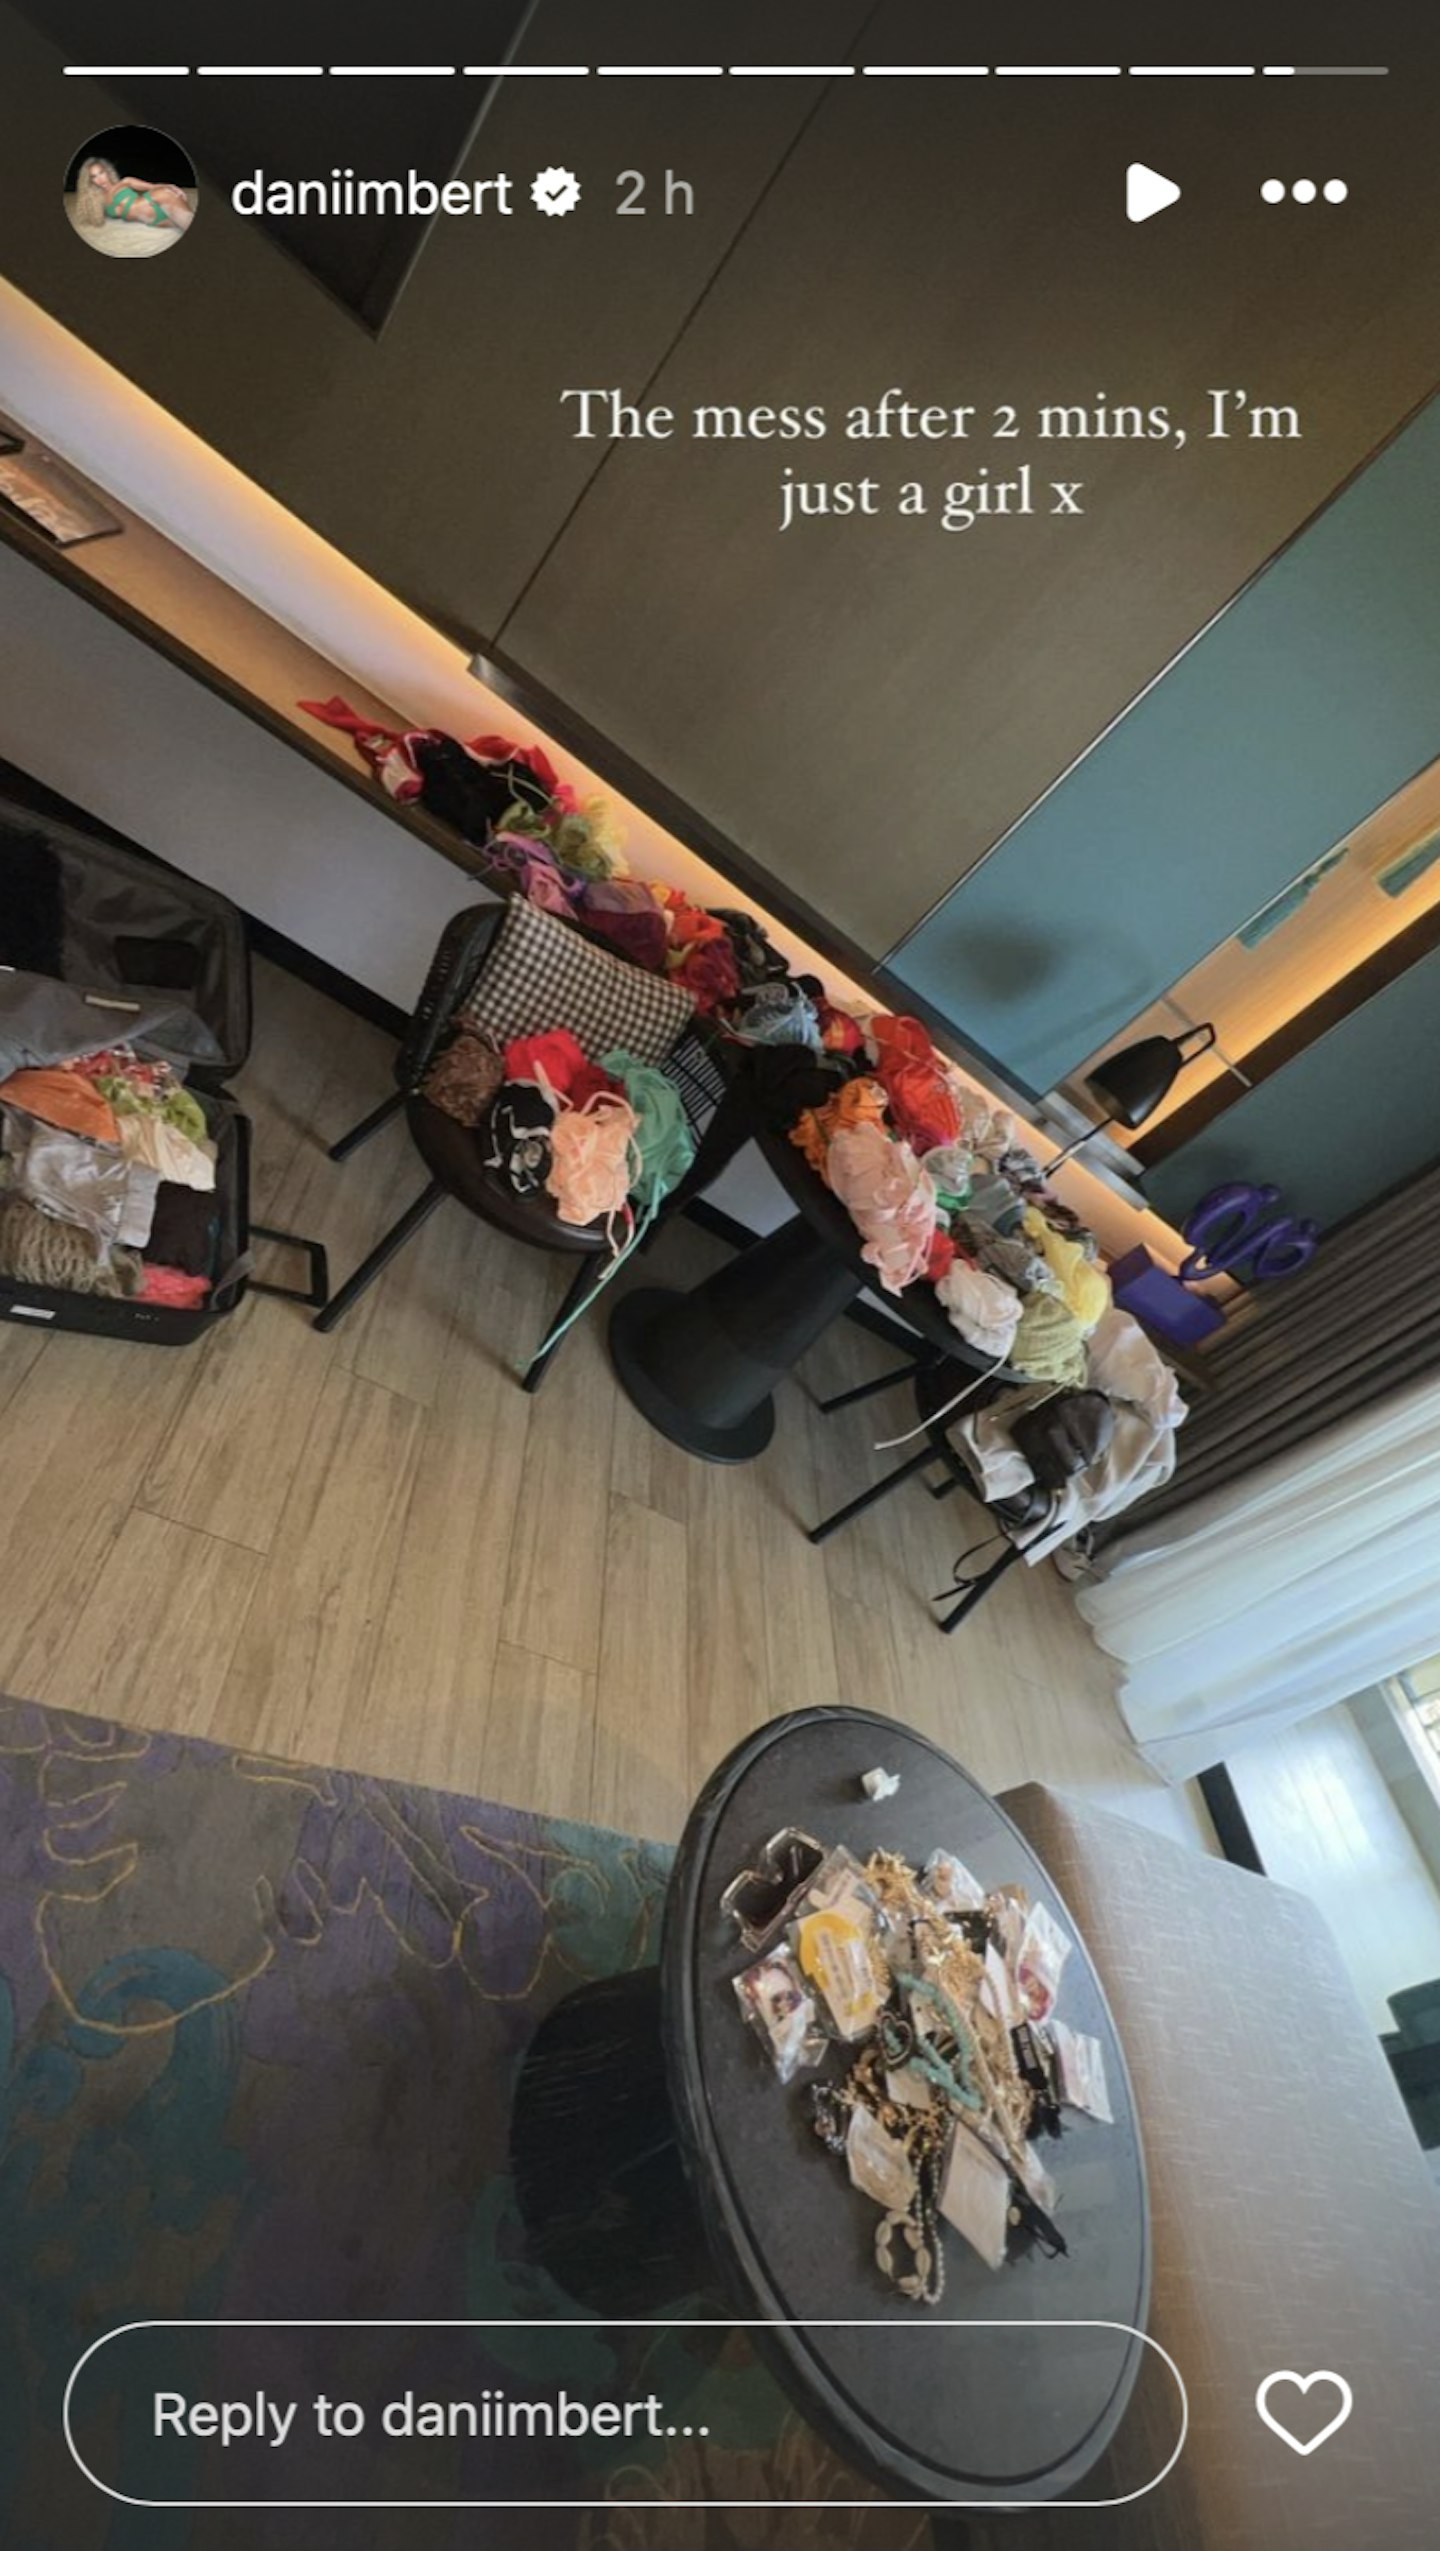 Dani Imbert's messy hotel room